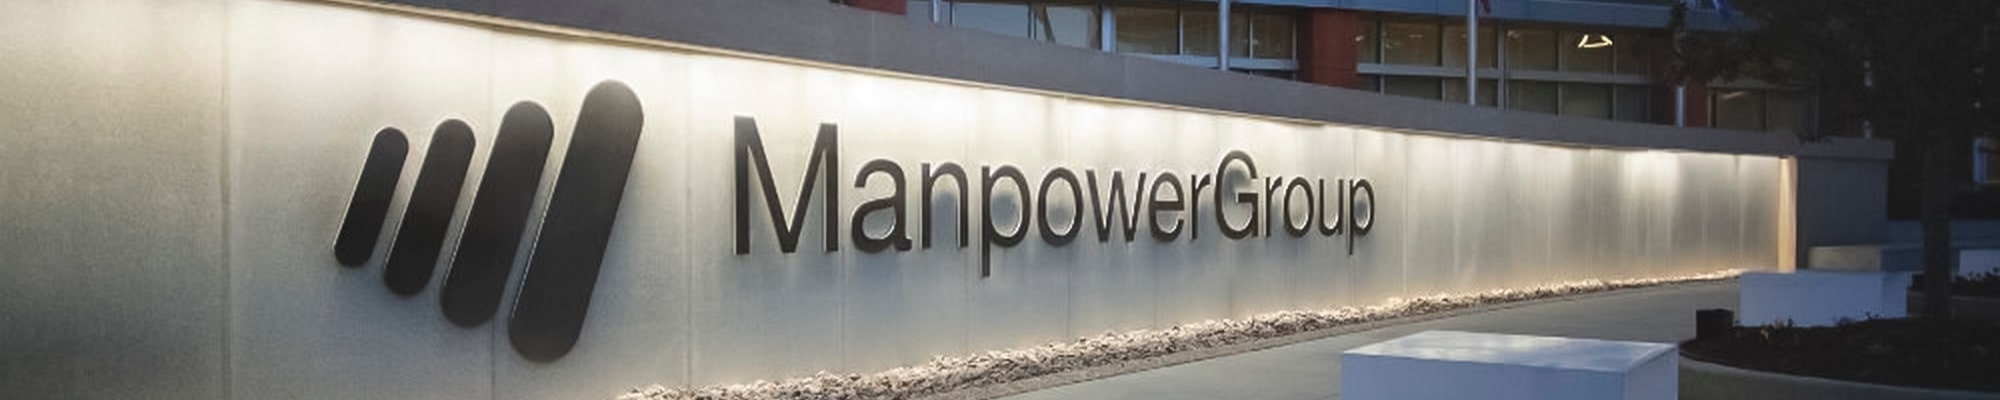 manpowergroup head quarter banner